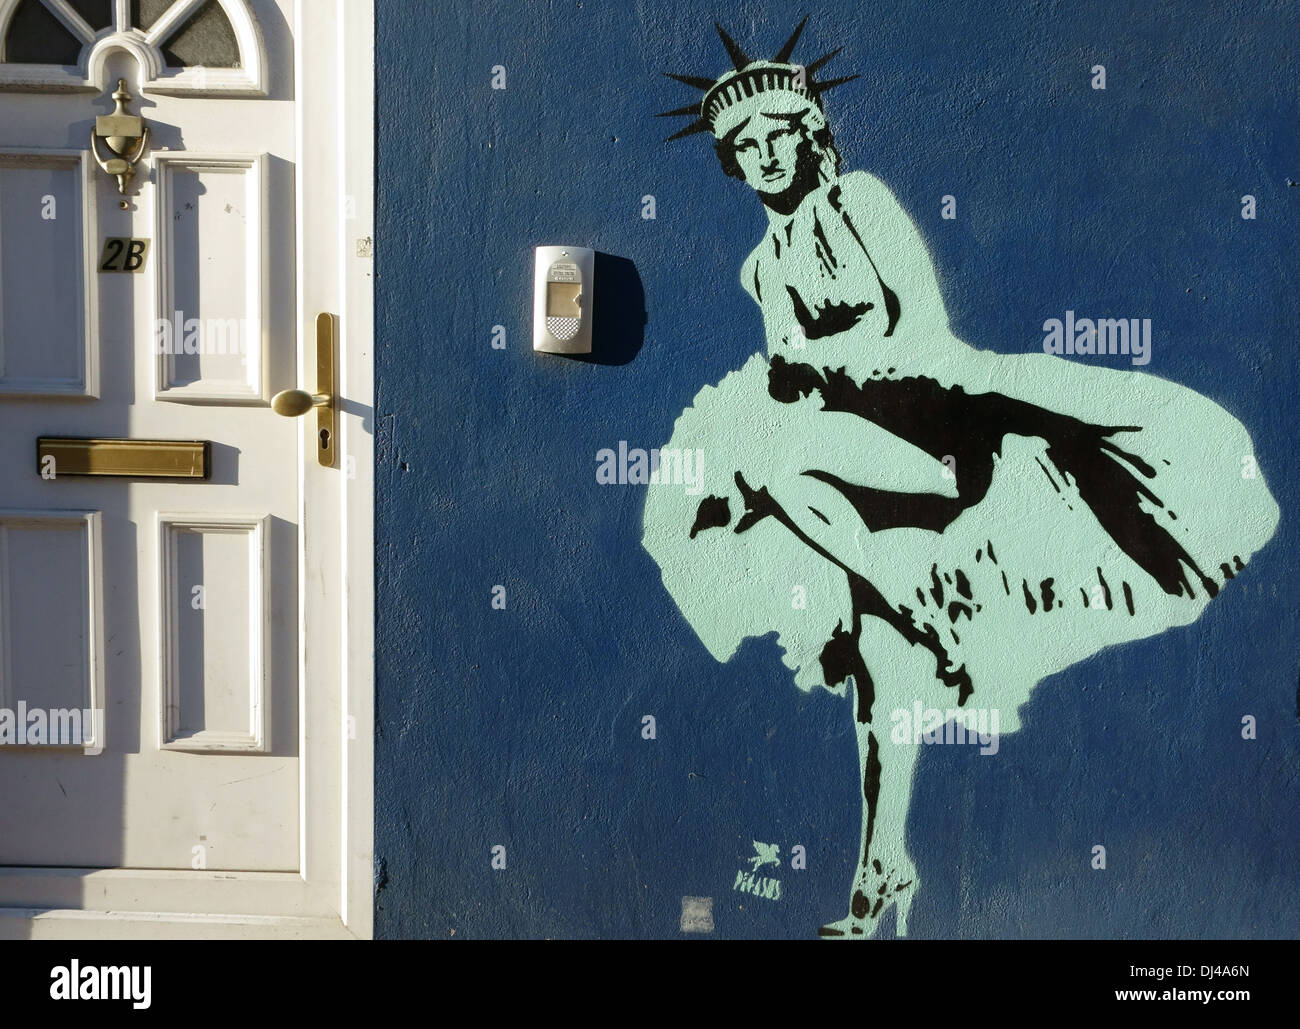 Dancing Statue of Liberty by Pegasus, American street artist based in London Stock Photo